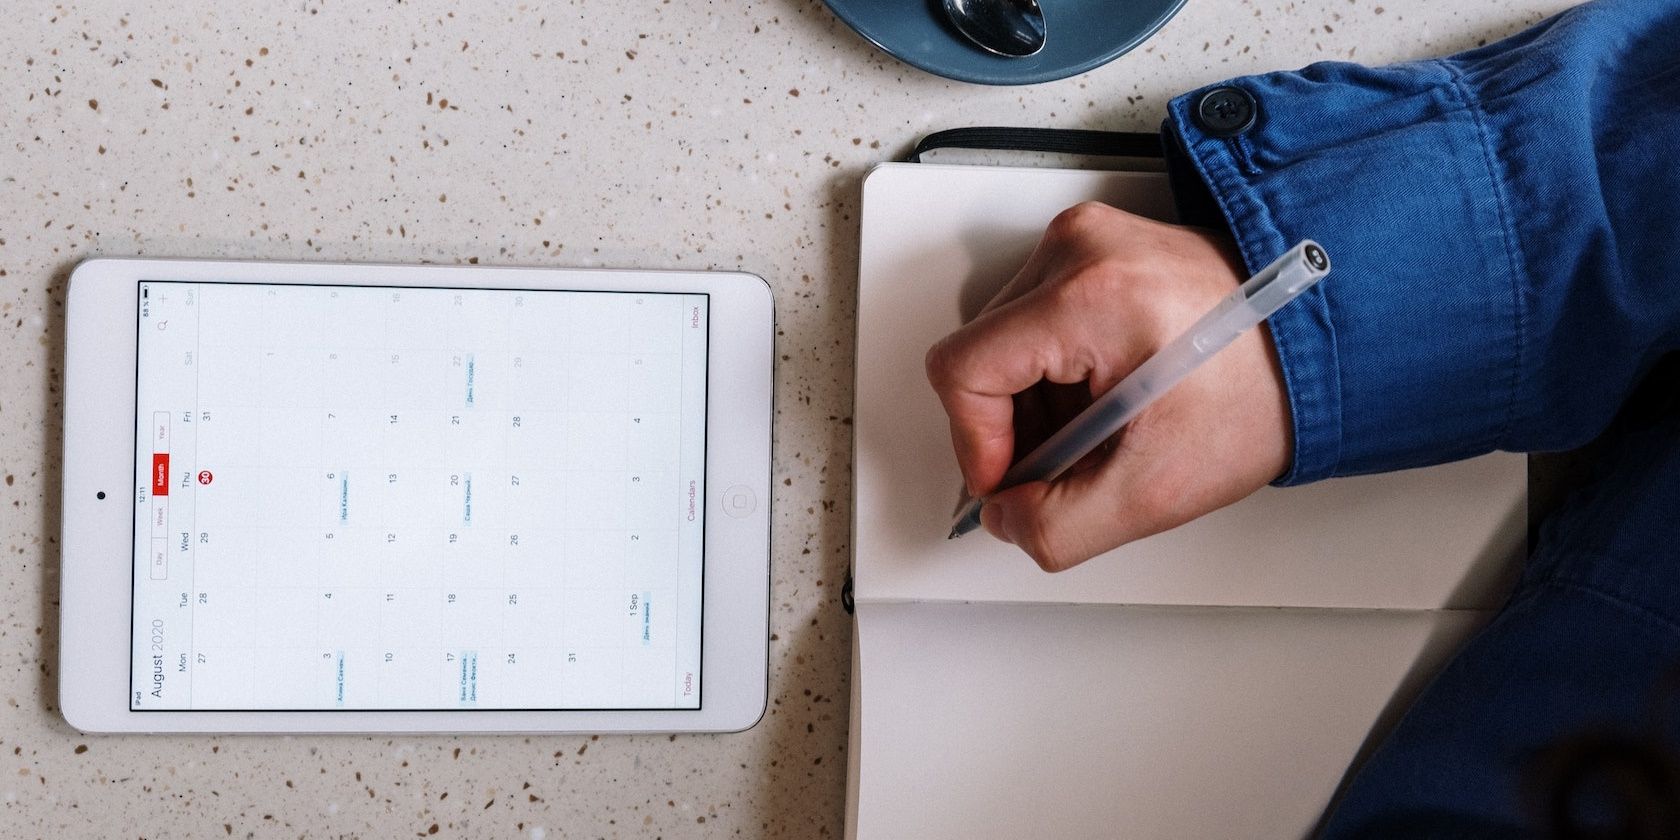 Digital Calendar on surface with blank notebook